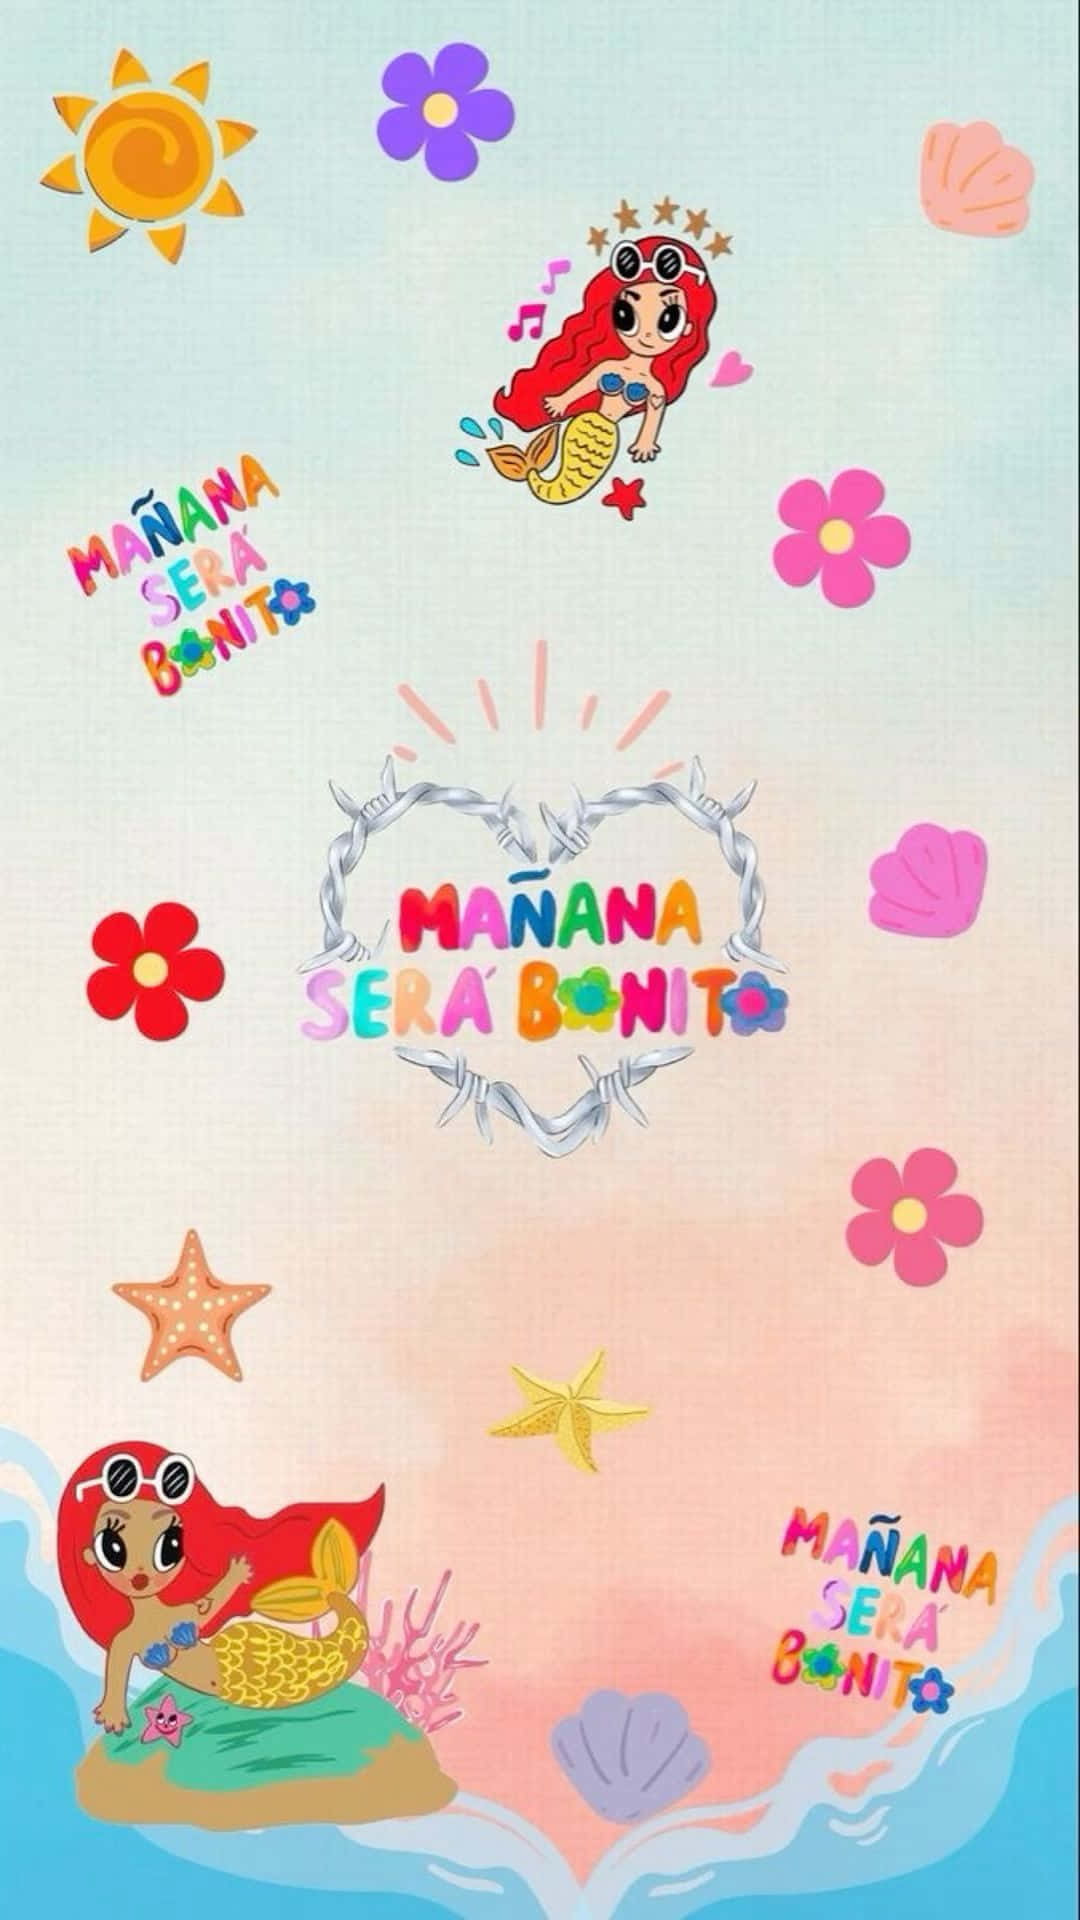 Manana Sera Bonito Animated Artwork Wallpaper